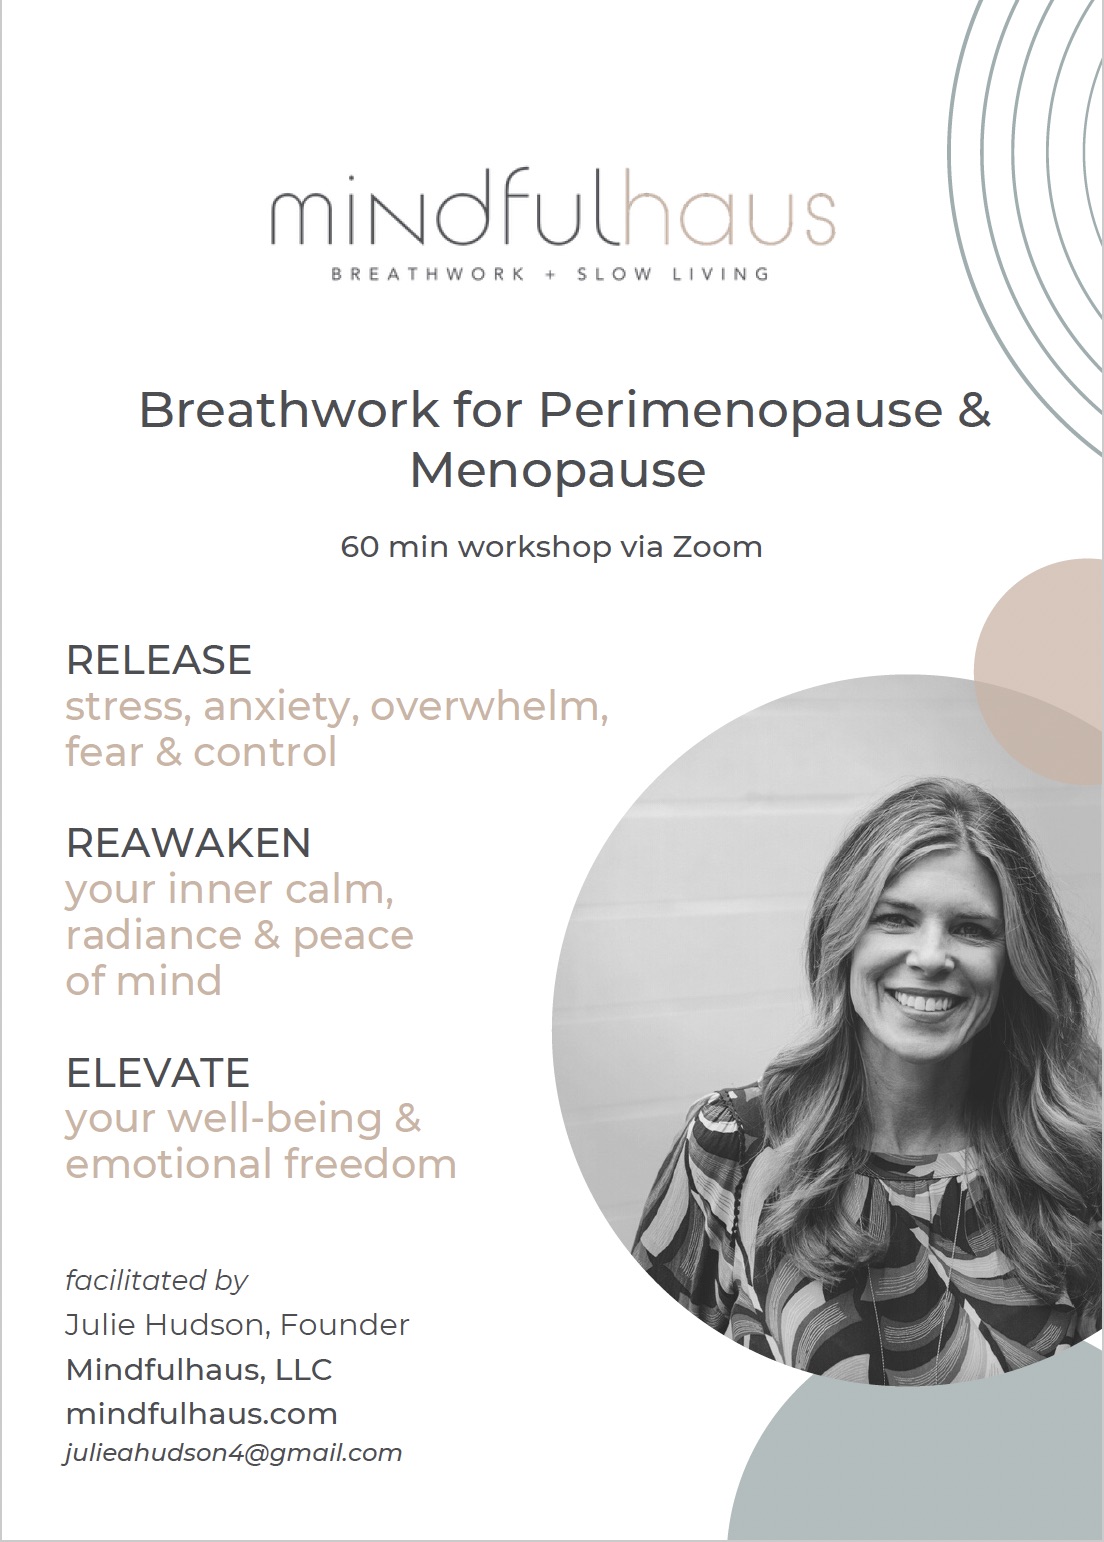 Mindfulhaus breathwork for perimenopause & menopause